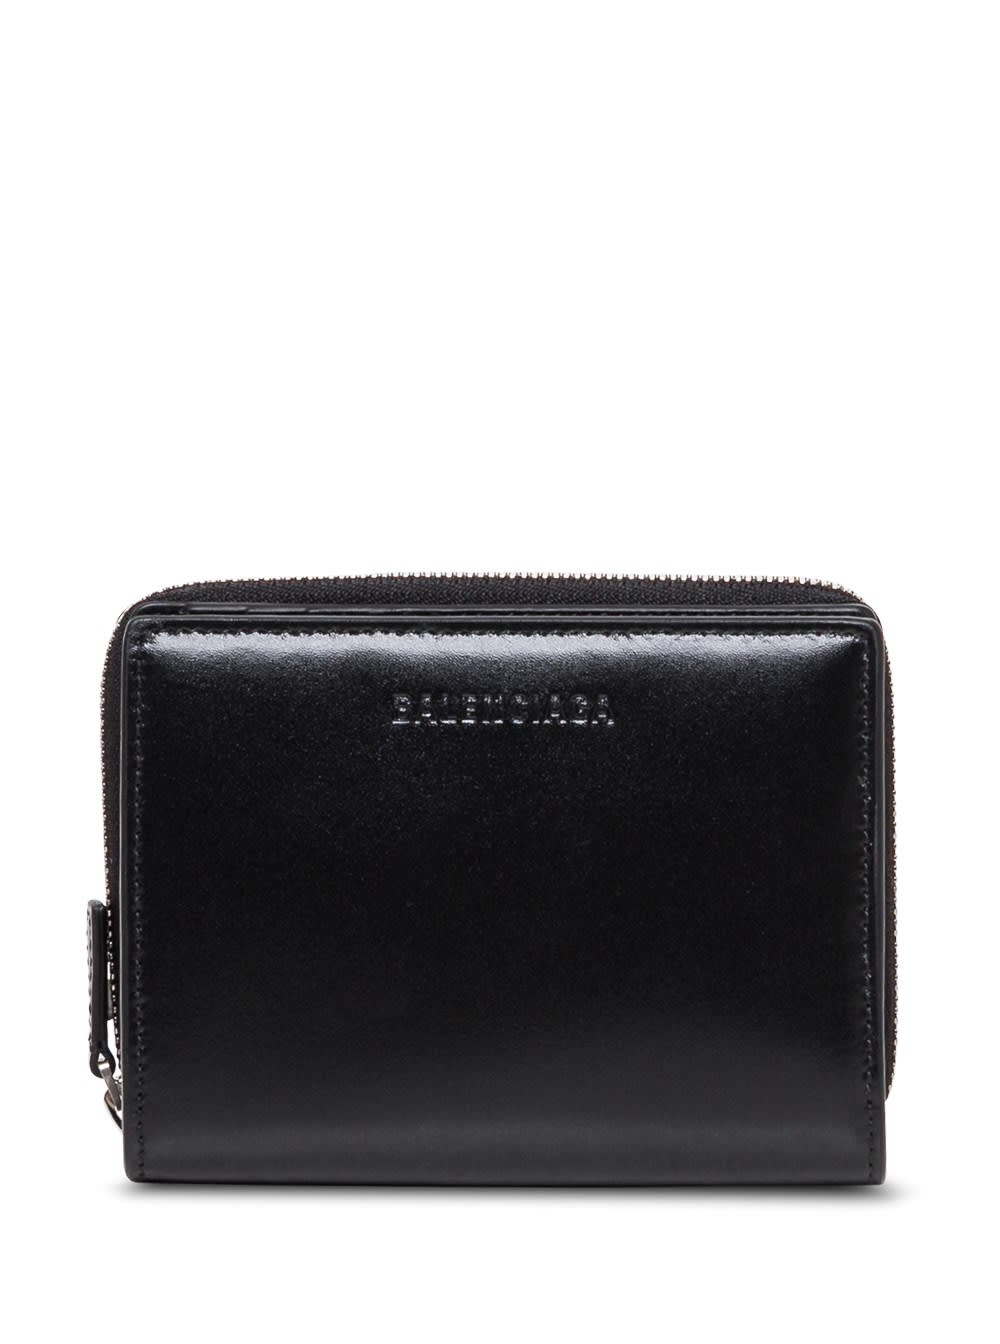 Balenciaga Black Leather Bifold Wallet With Logo